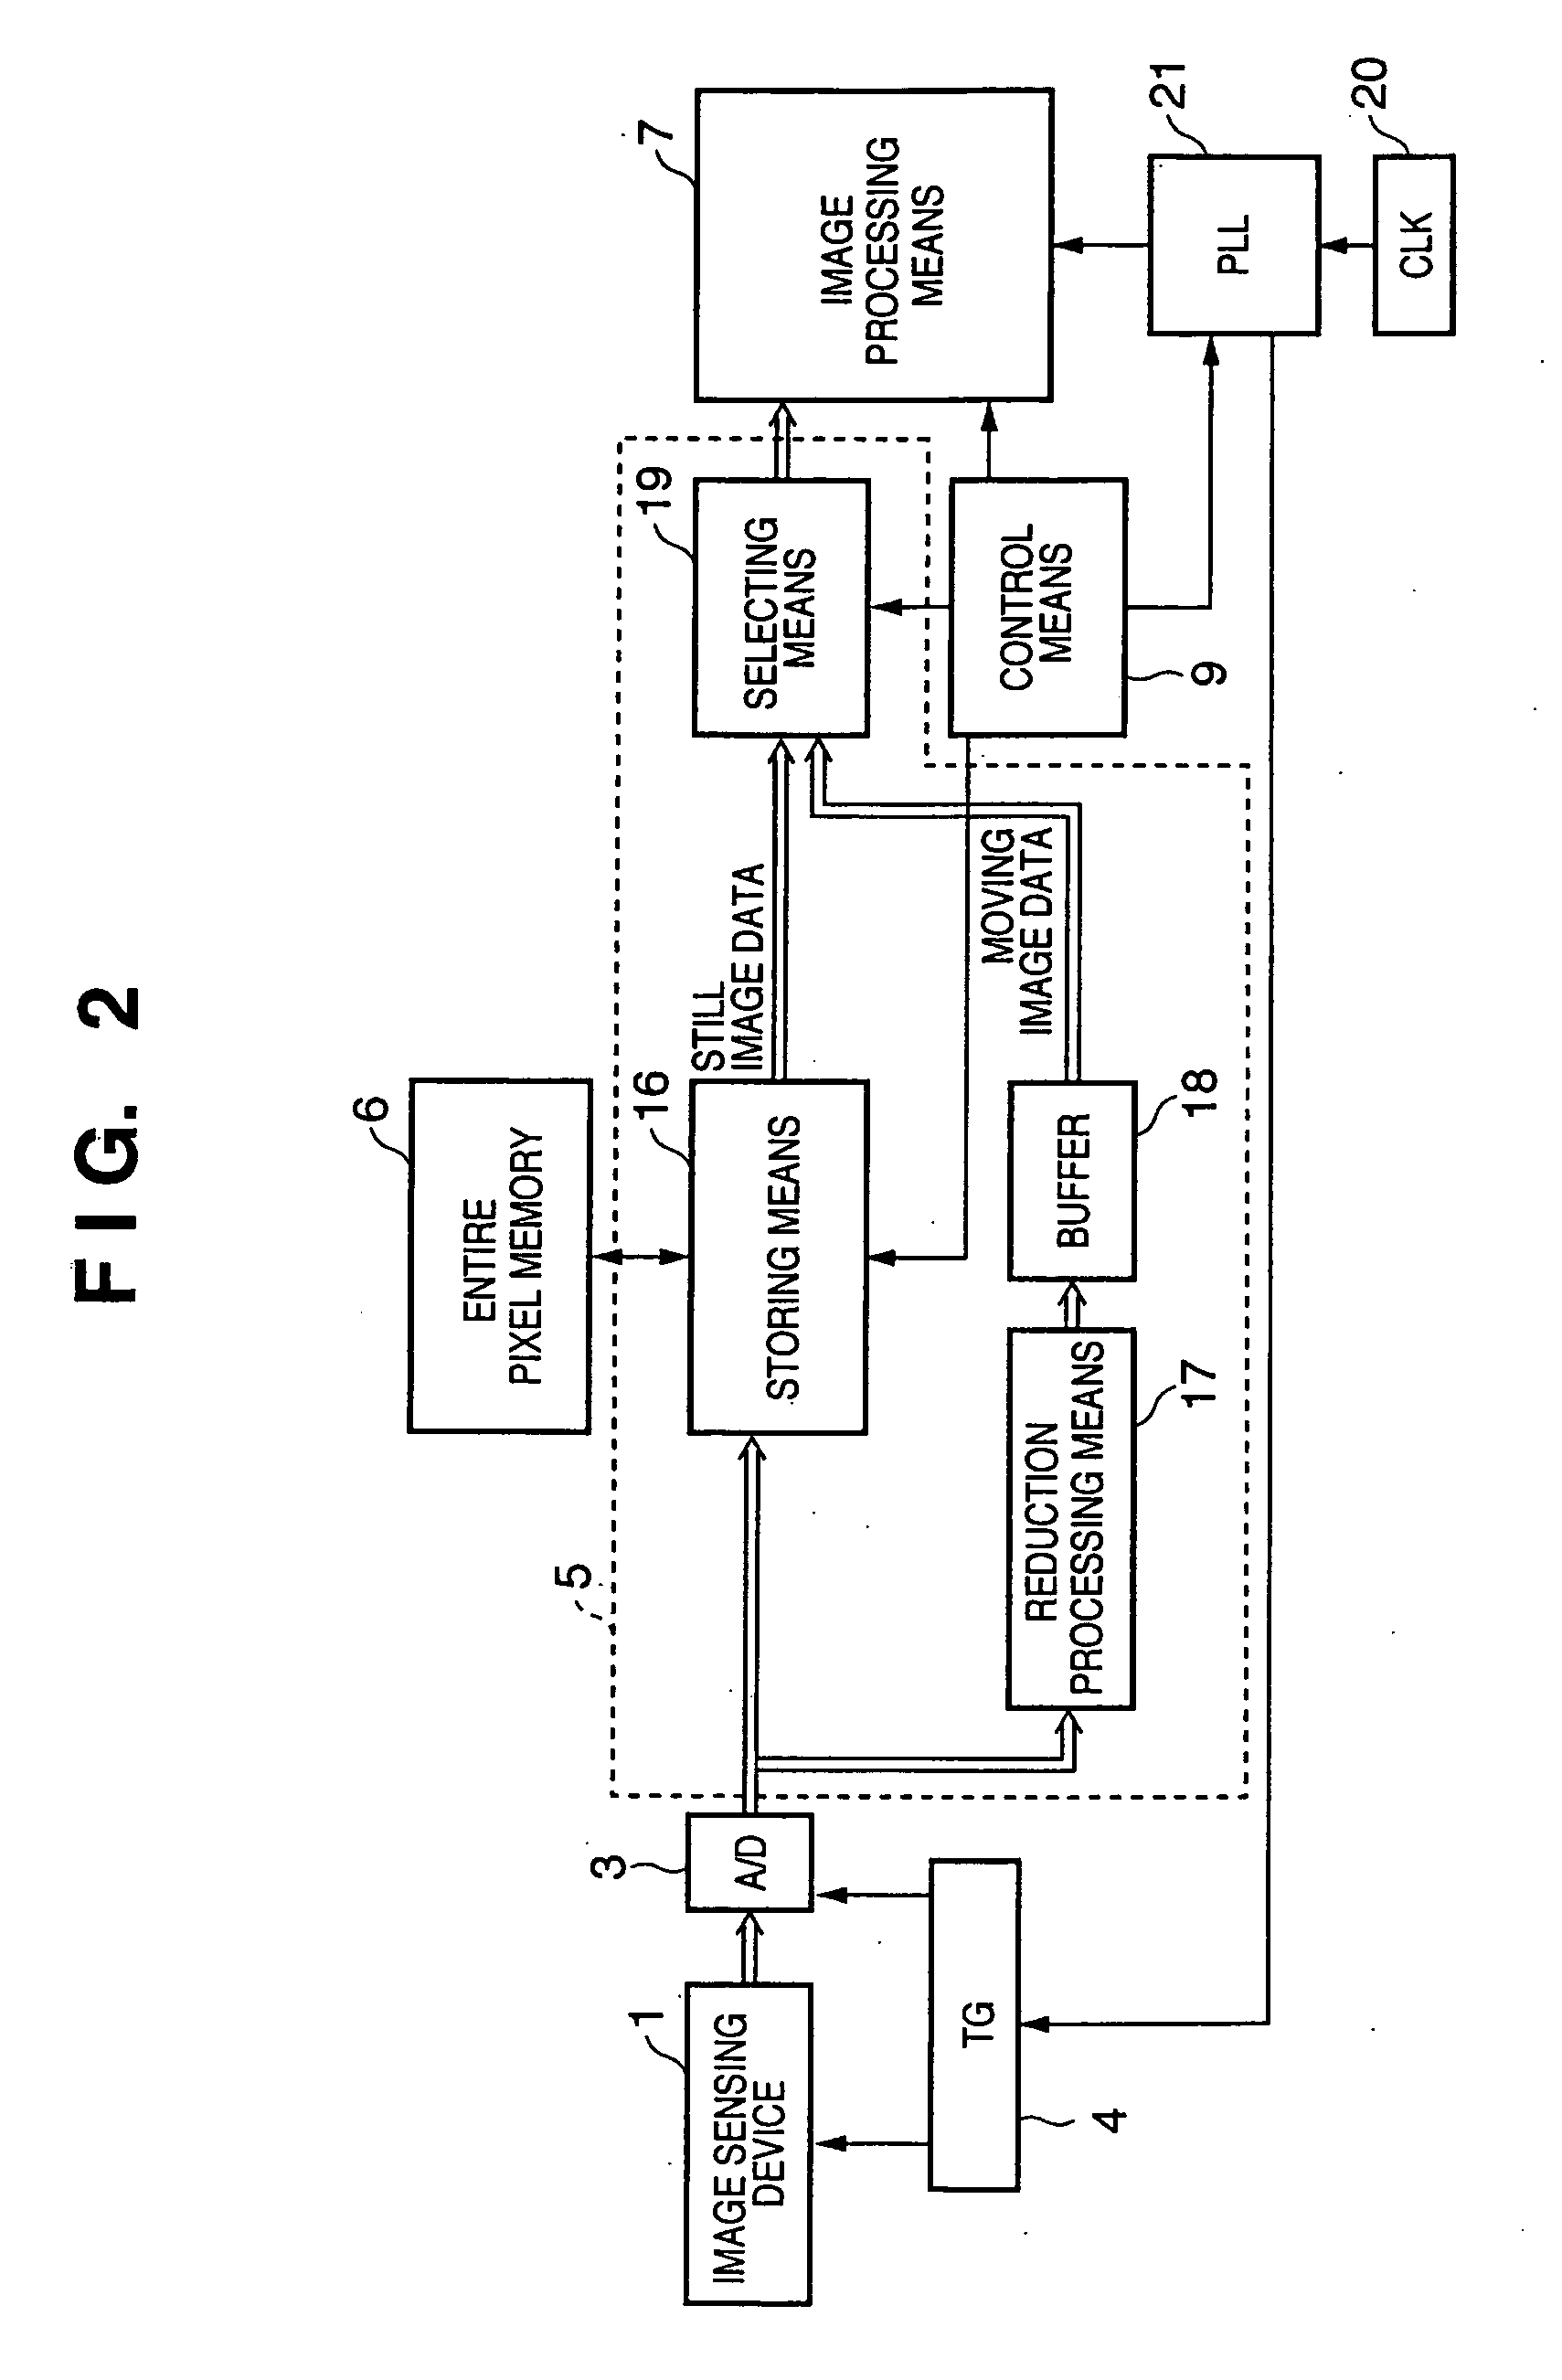 Image sensing apparatus, method thereof, storage medium and computer program